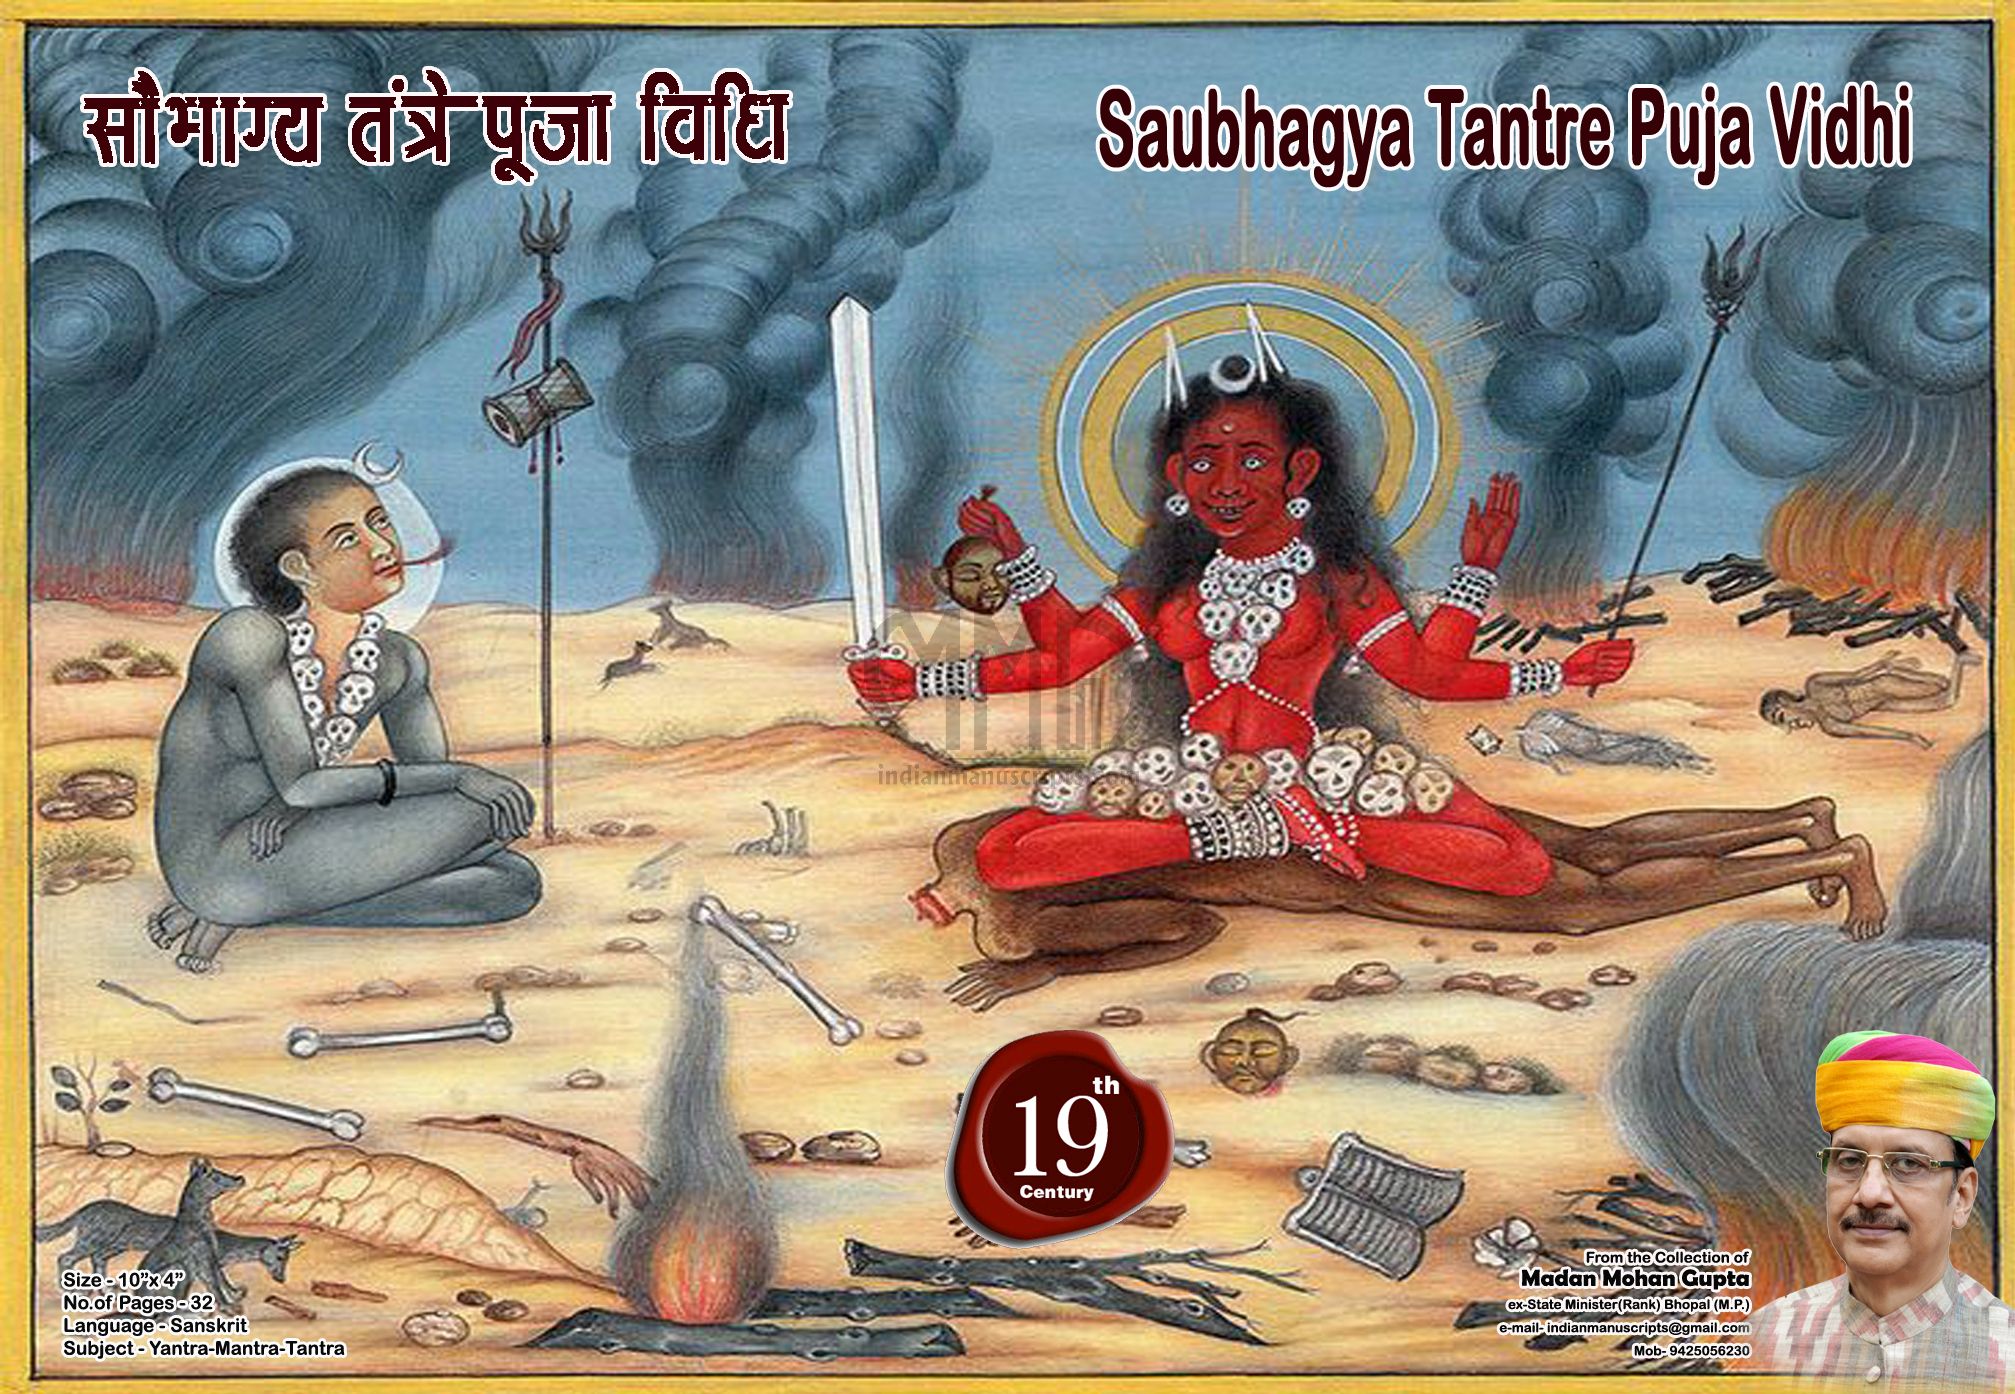 Saubhagya Tantra Puja Vidhi